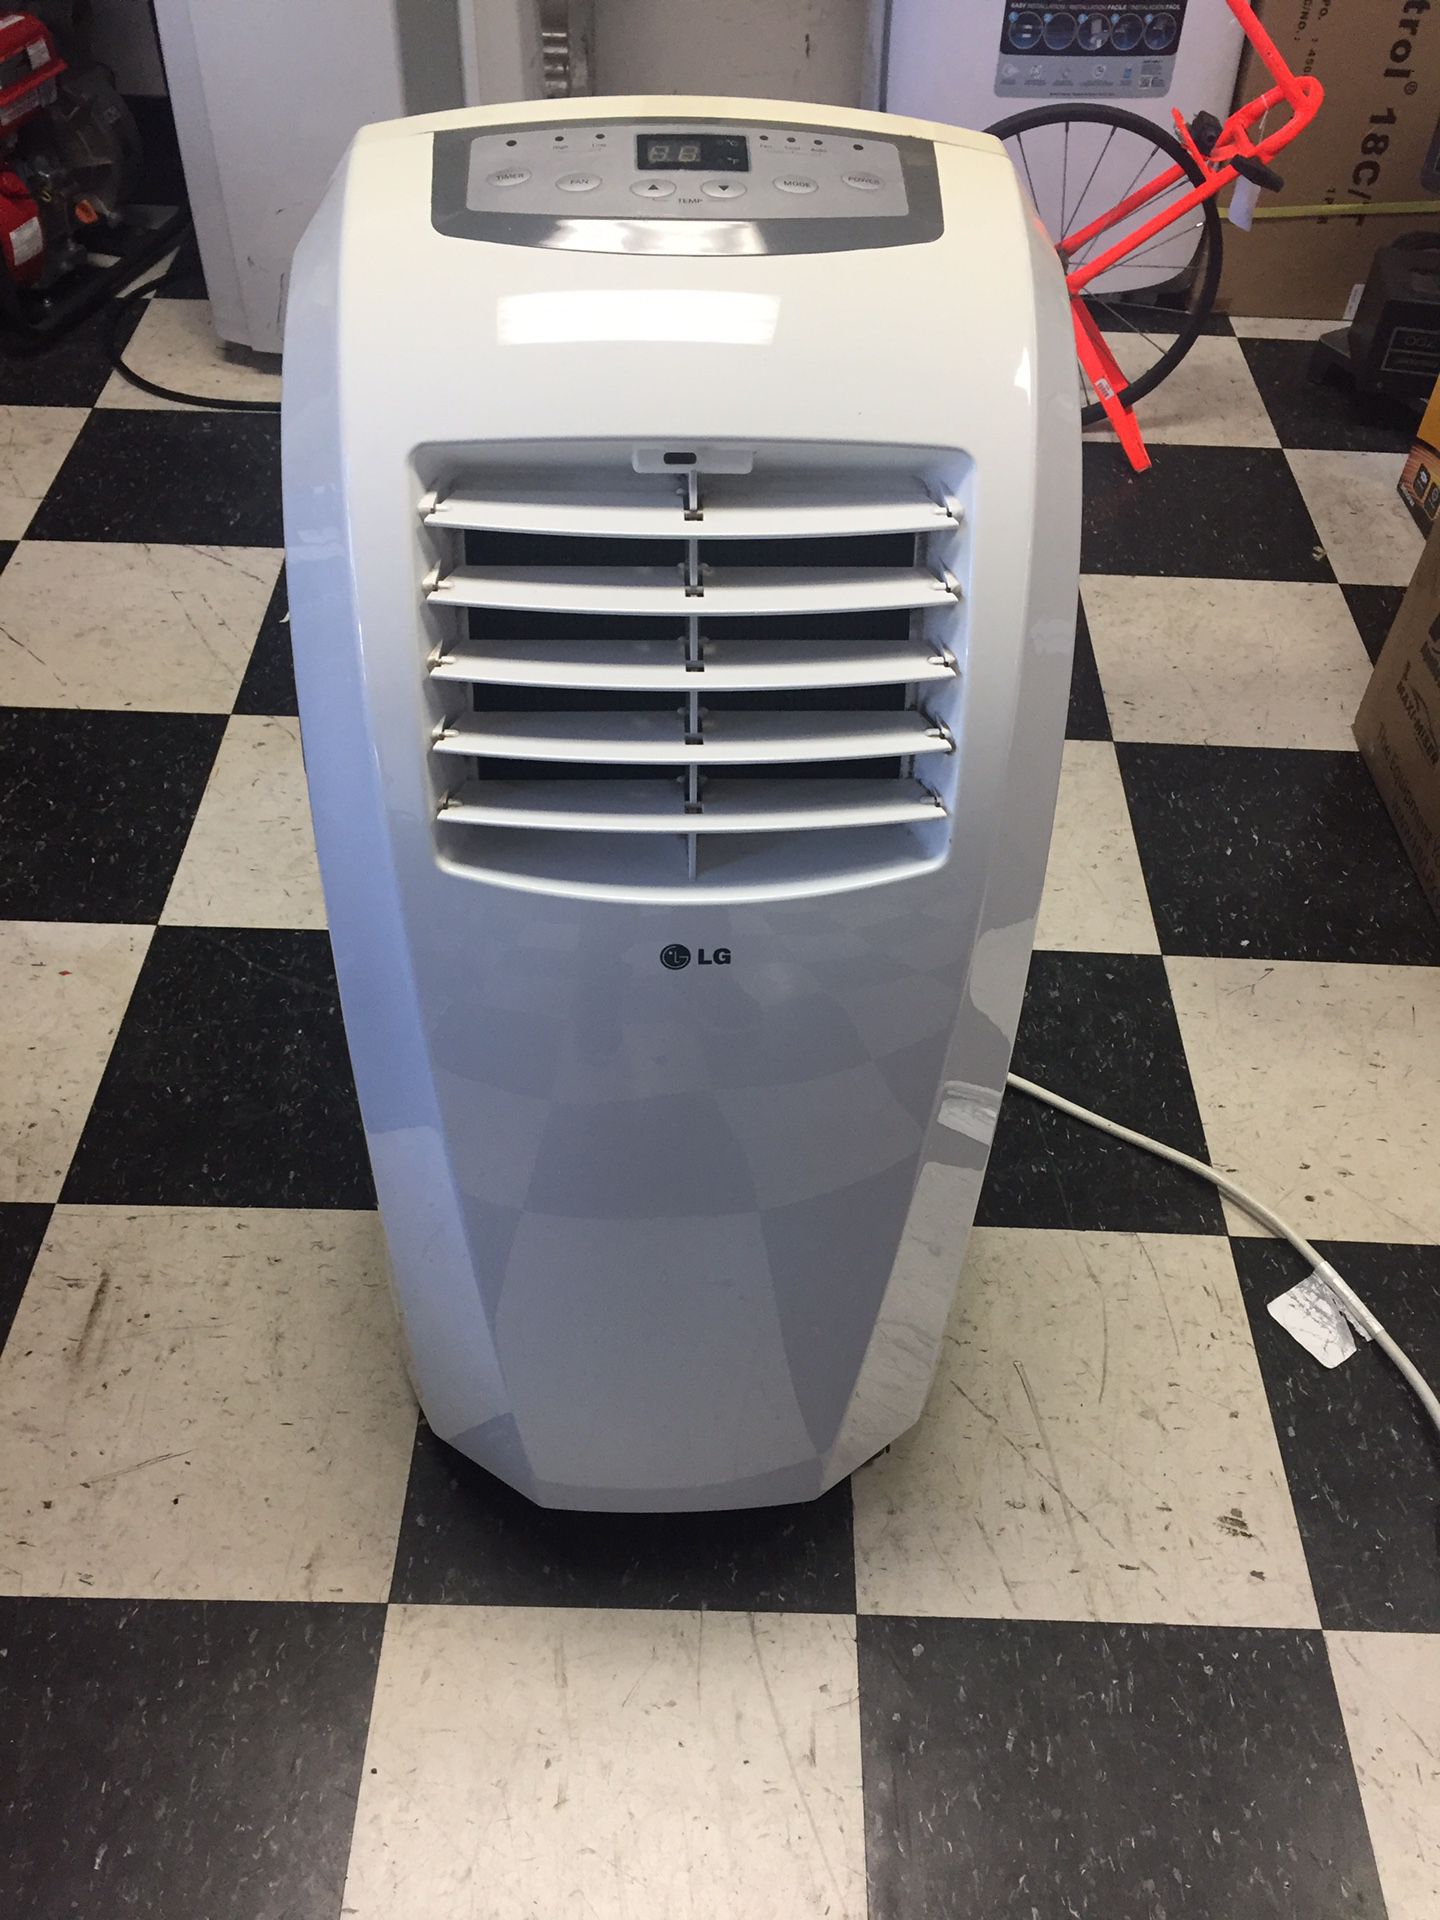 LG Air Conditioner / Dehumidifier 10K BTU w/ Hose and Window Attachment